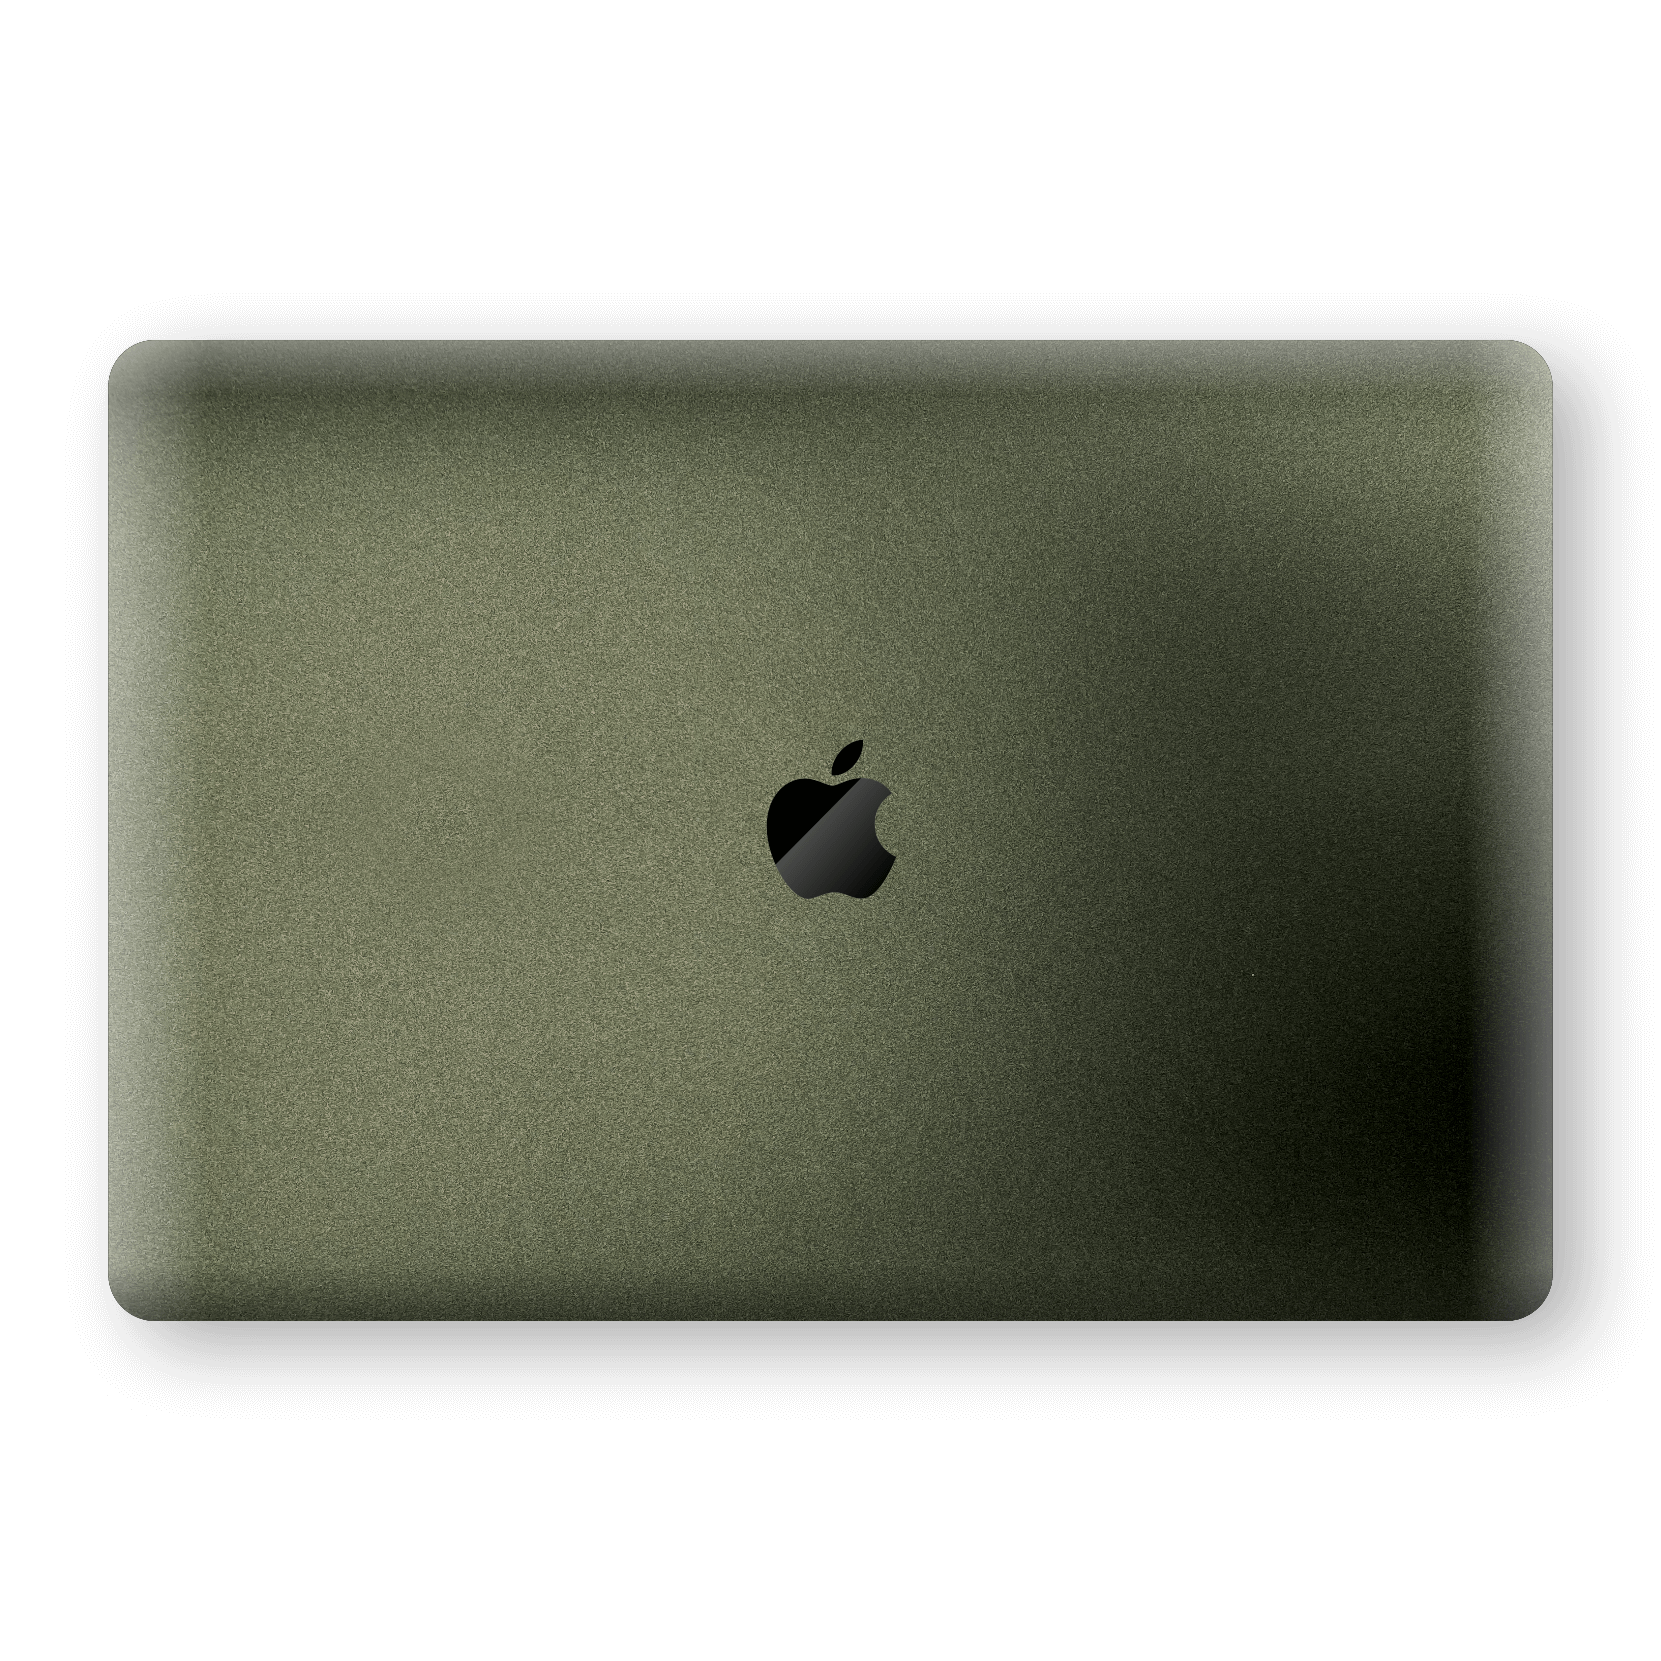 MacBook Pro 13" (2019) Gloss Glossy MILITARY GREEN Metallic Skin Wrap Decal Protector Cover by EasySkinz | EasySkinz.com